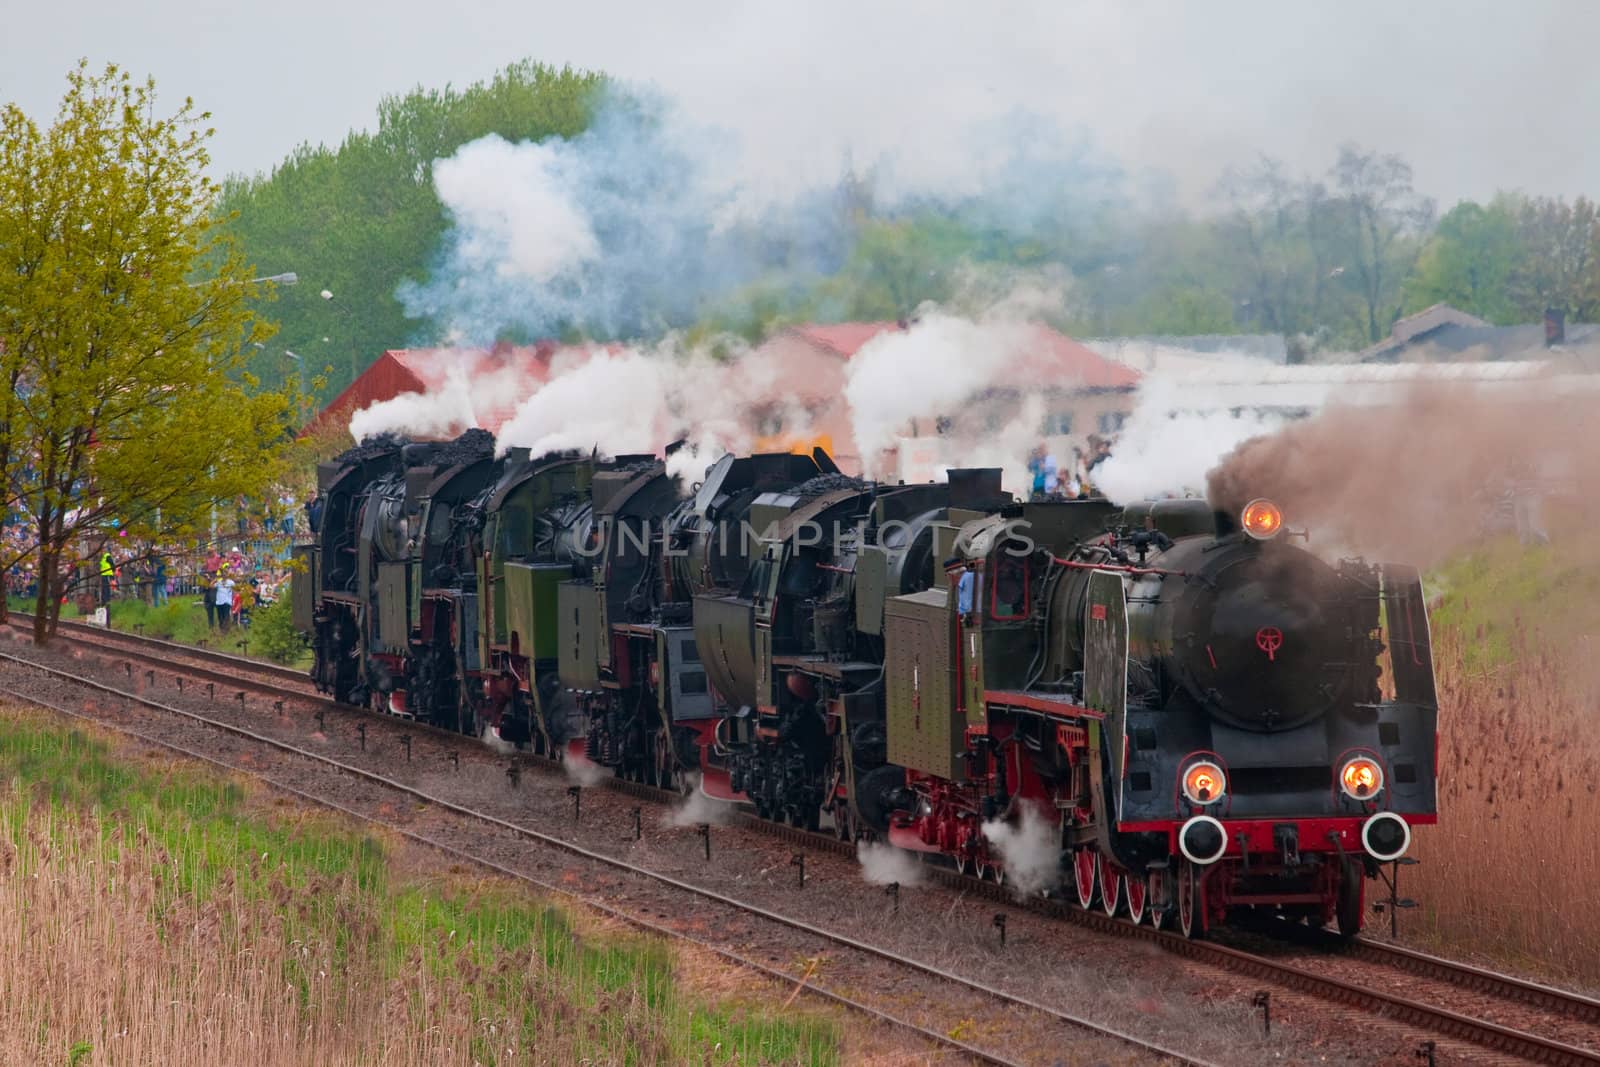 Retro steam locomotives parade in Poland
